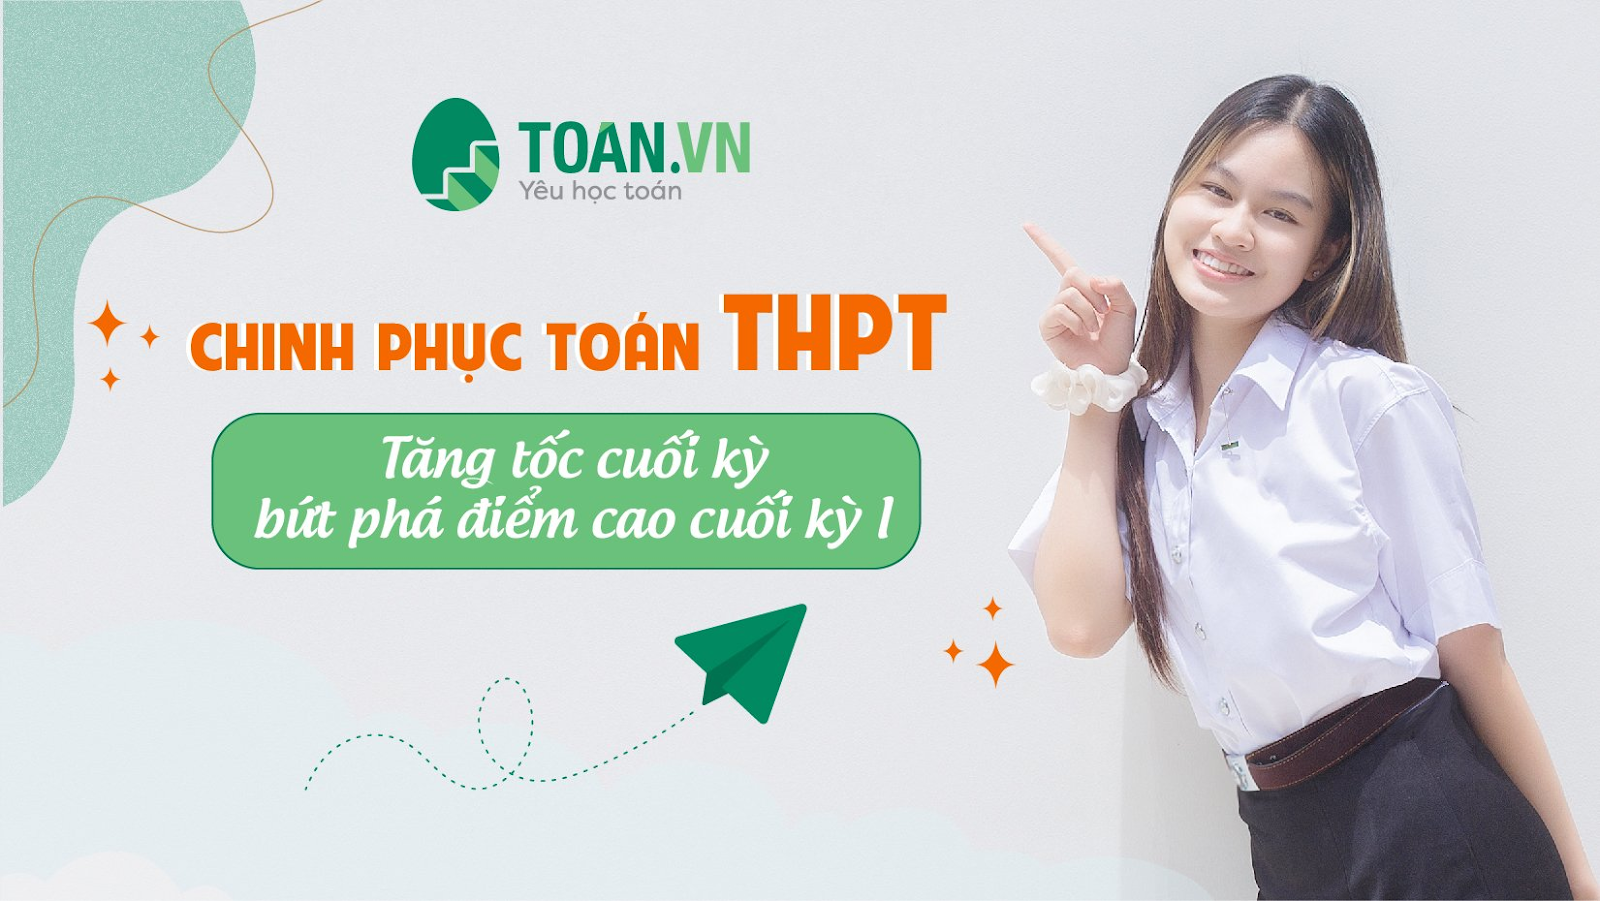 toanvn-chia-khoa-vang-cho-hanh-trinh-chinh-phuc-toan-hoc-cap-3-tai-ha-noi-4